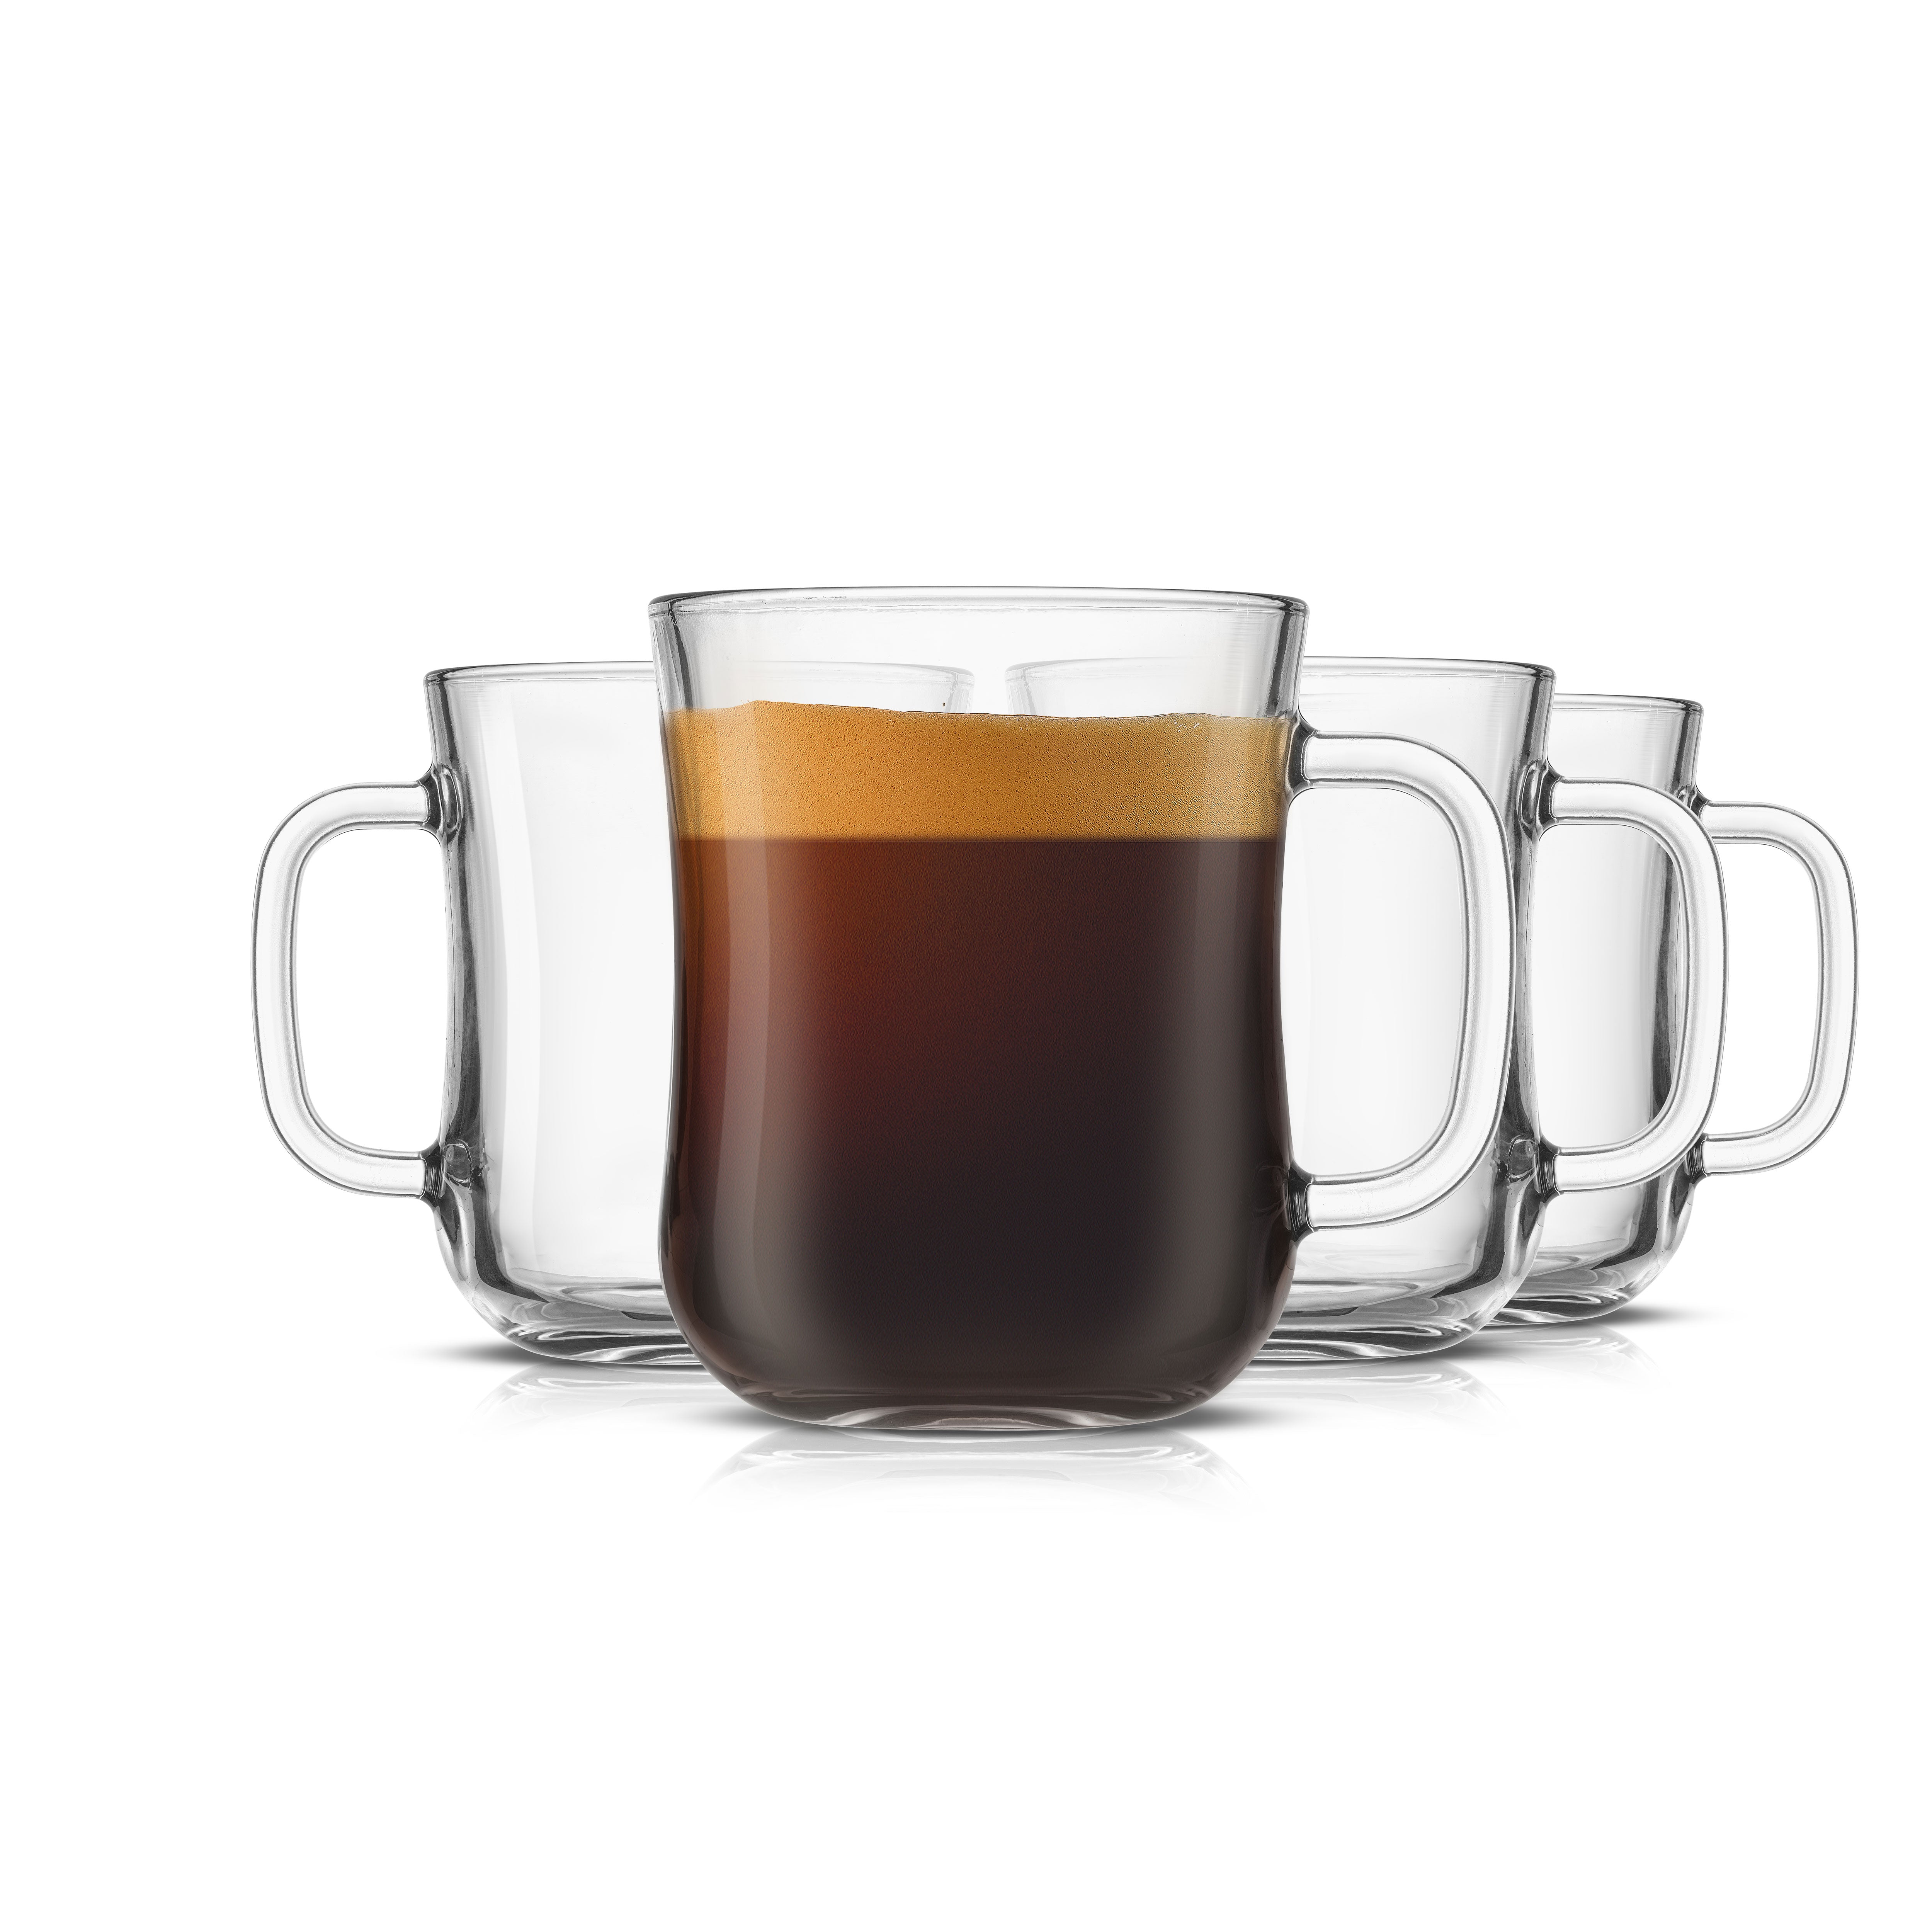 Diner Glass Coffee Mugs - Set of 4